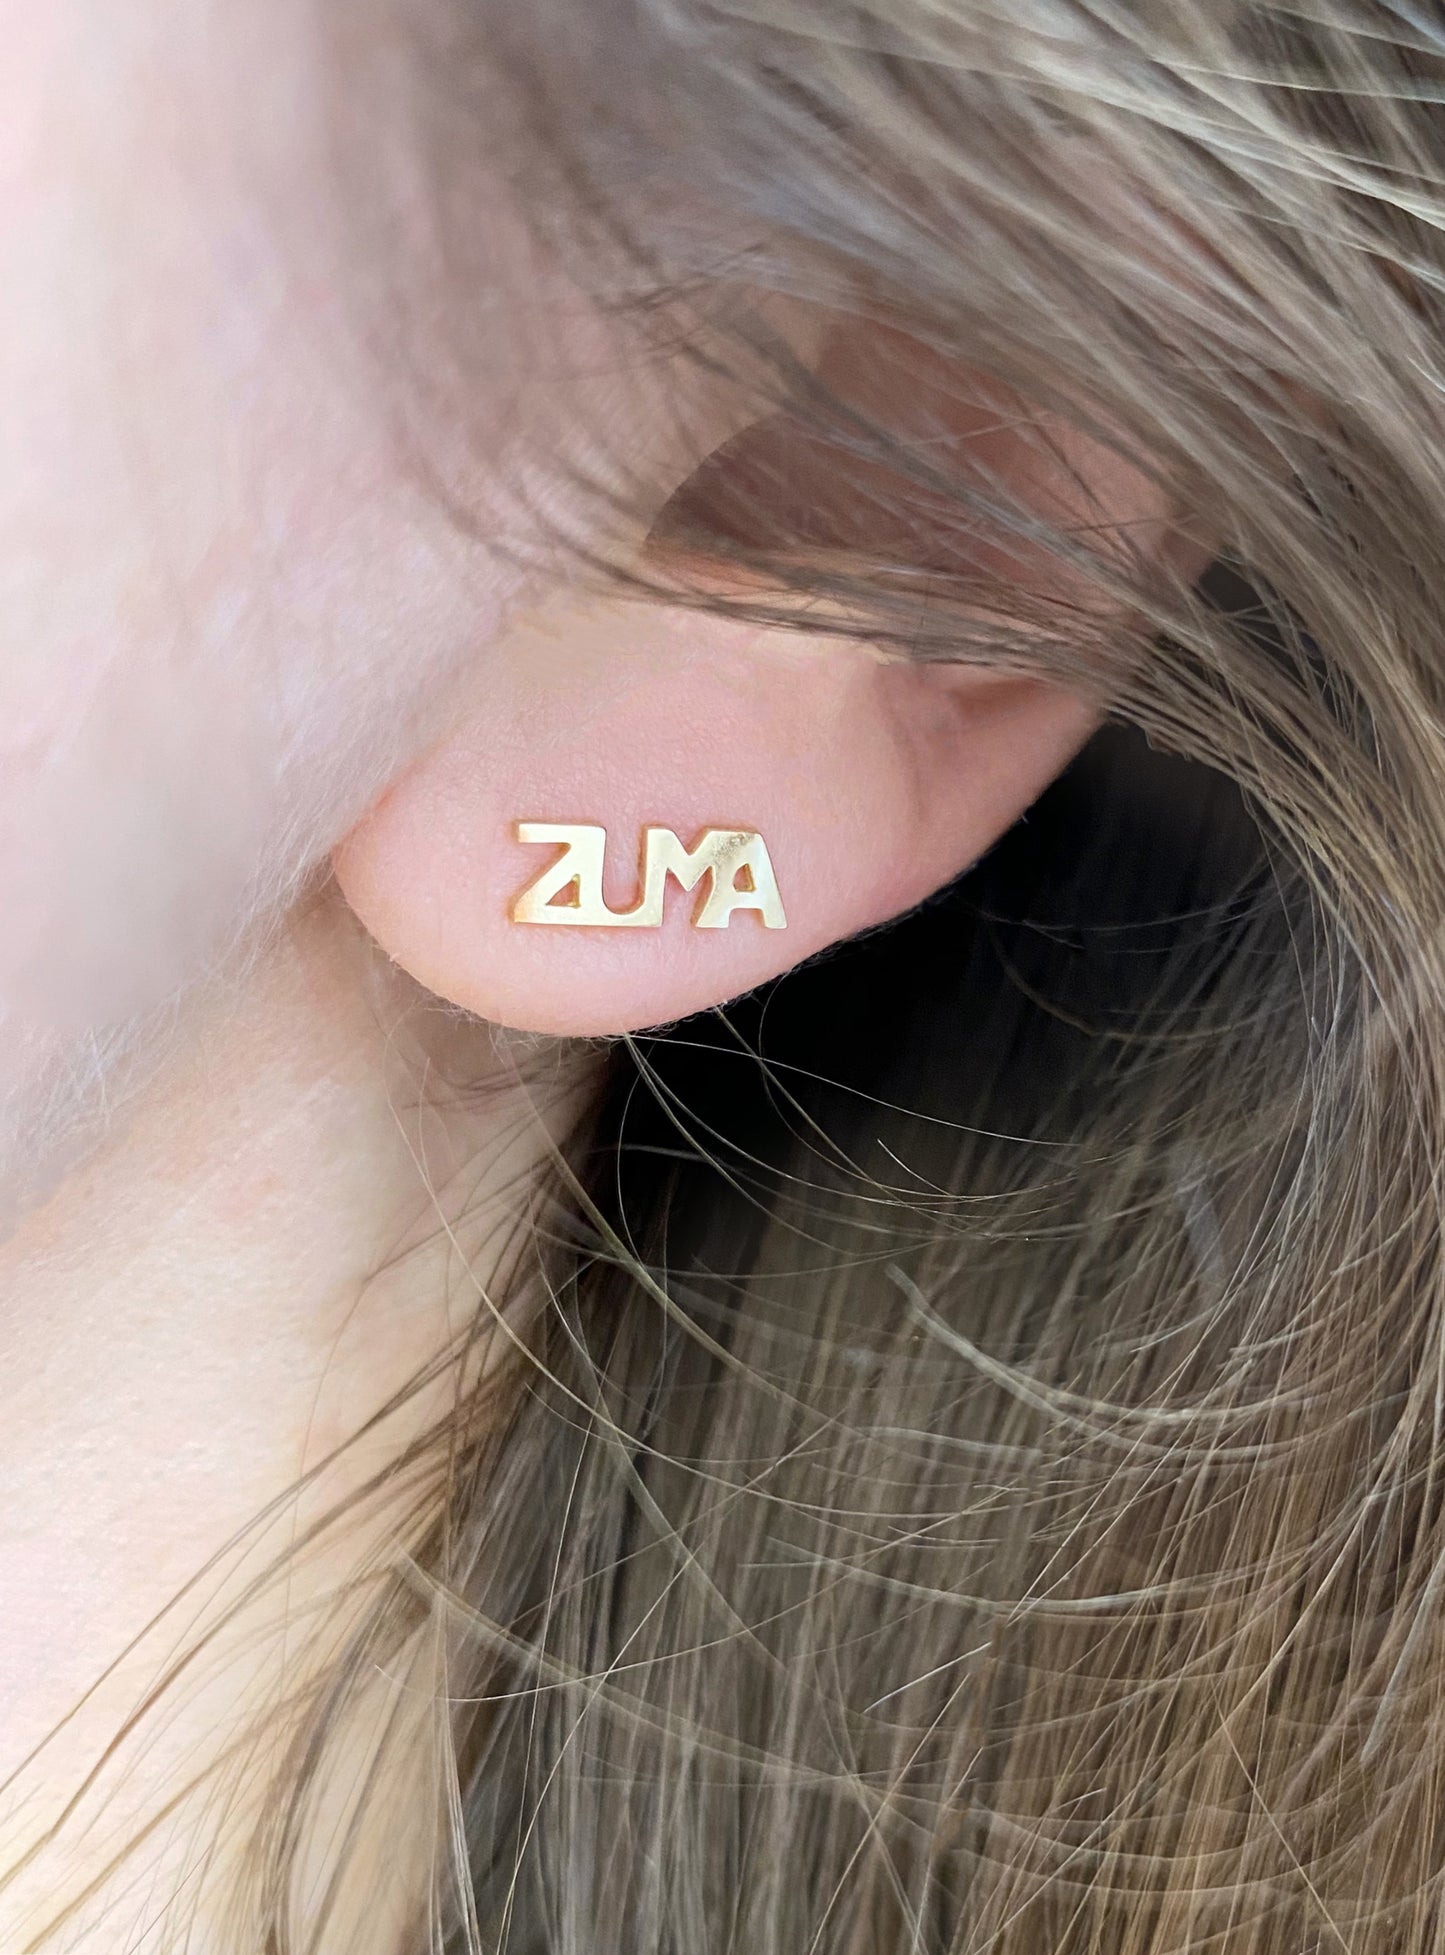 Visions Zuma Stud, single earring